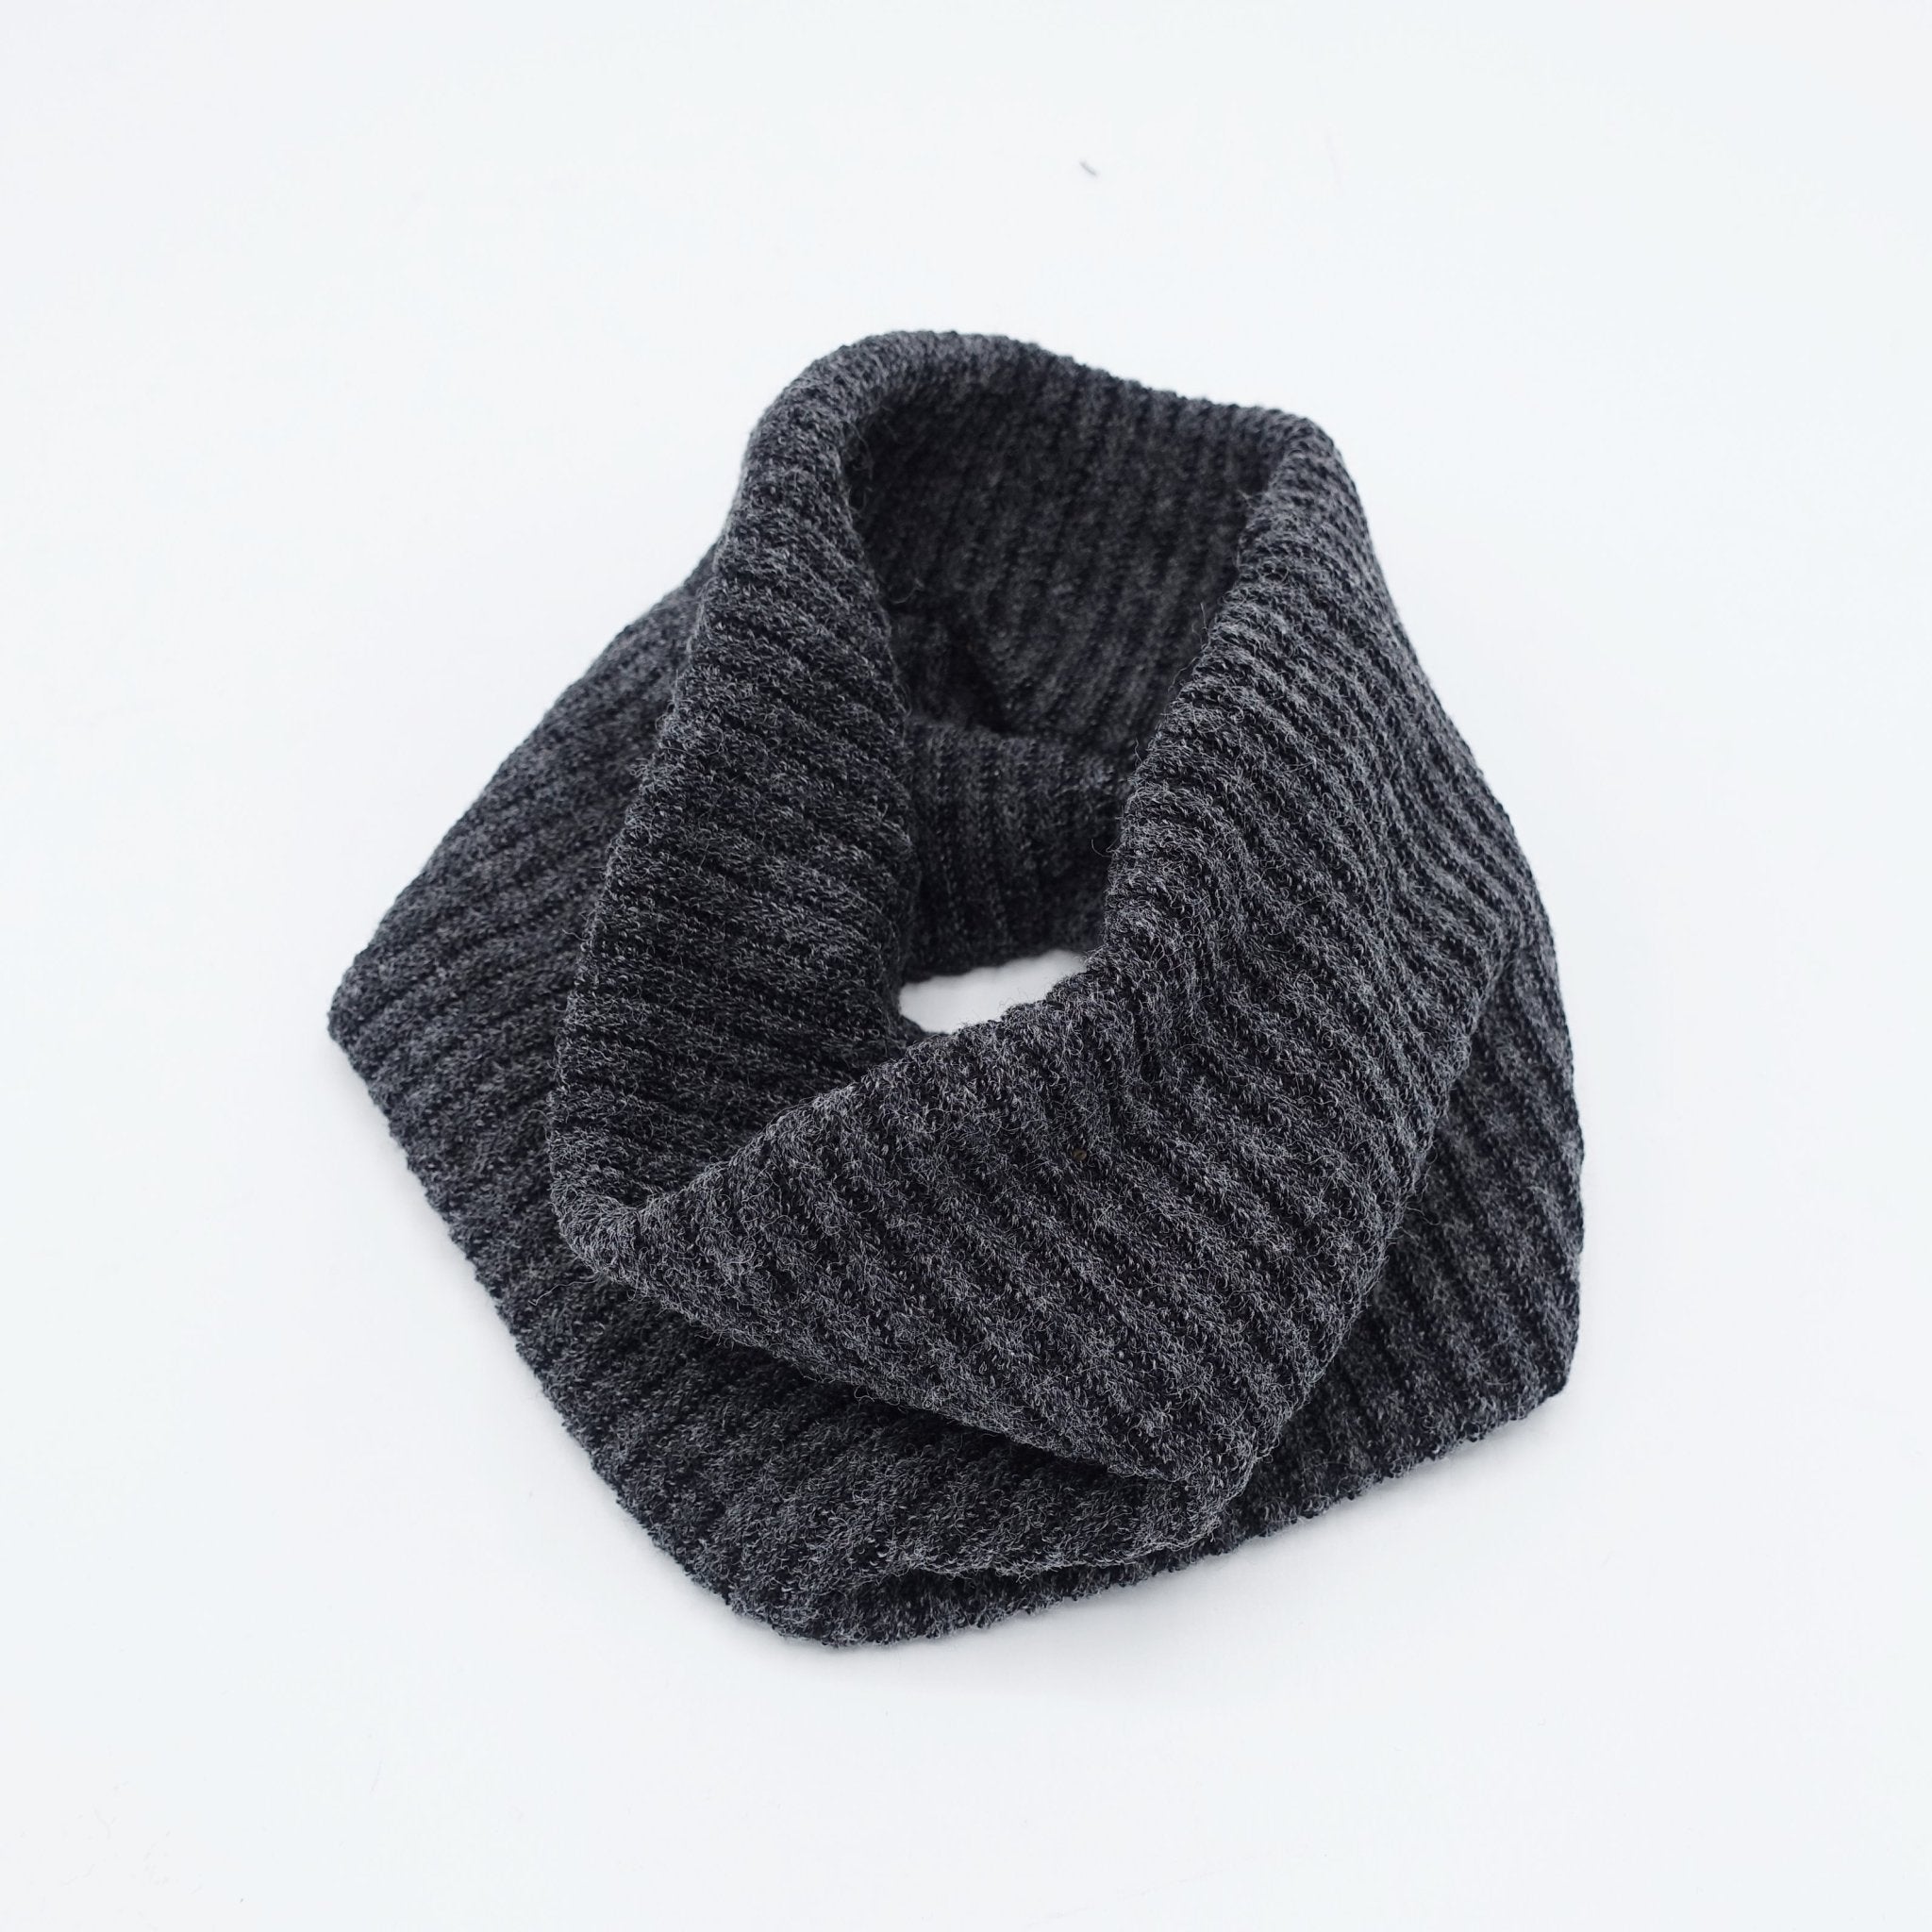 veryshine.com hairband/headband corrugated knit headwrap multi-functional headband Winter neck warmer